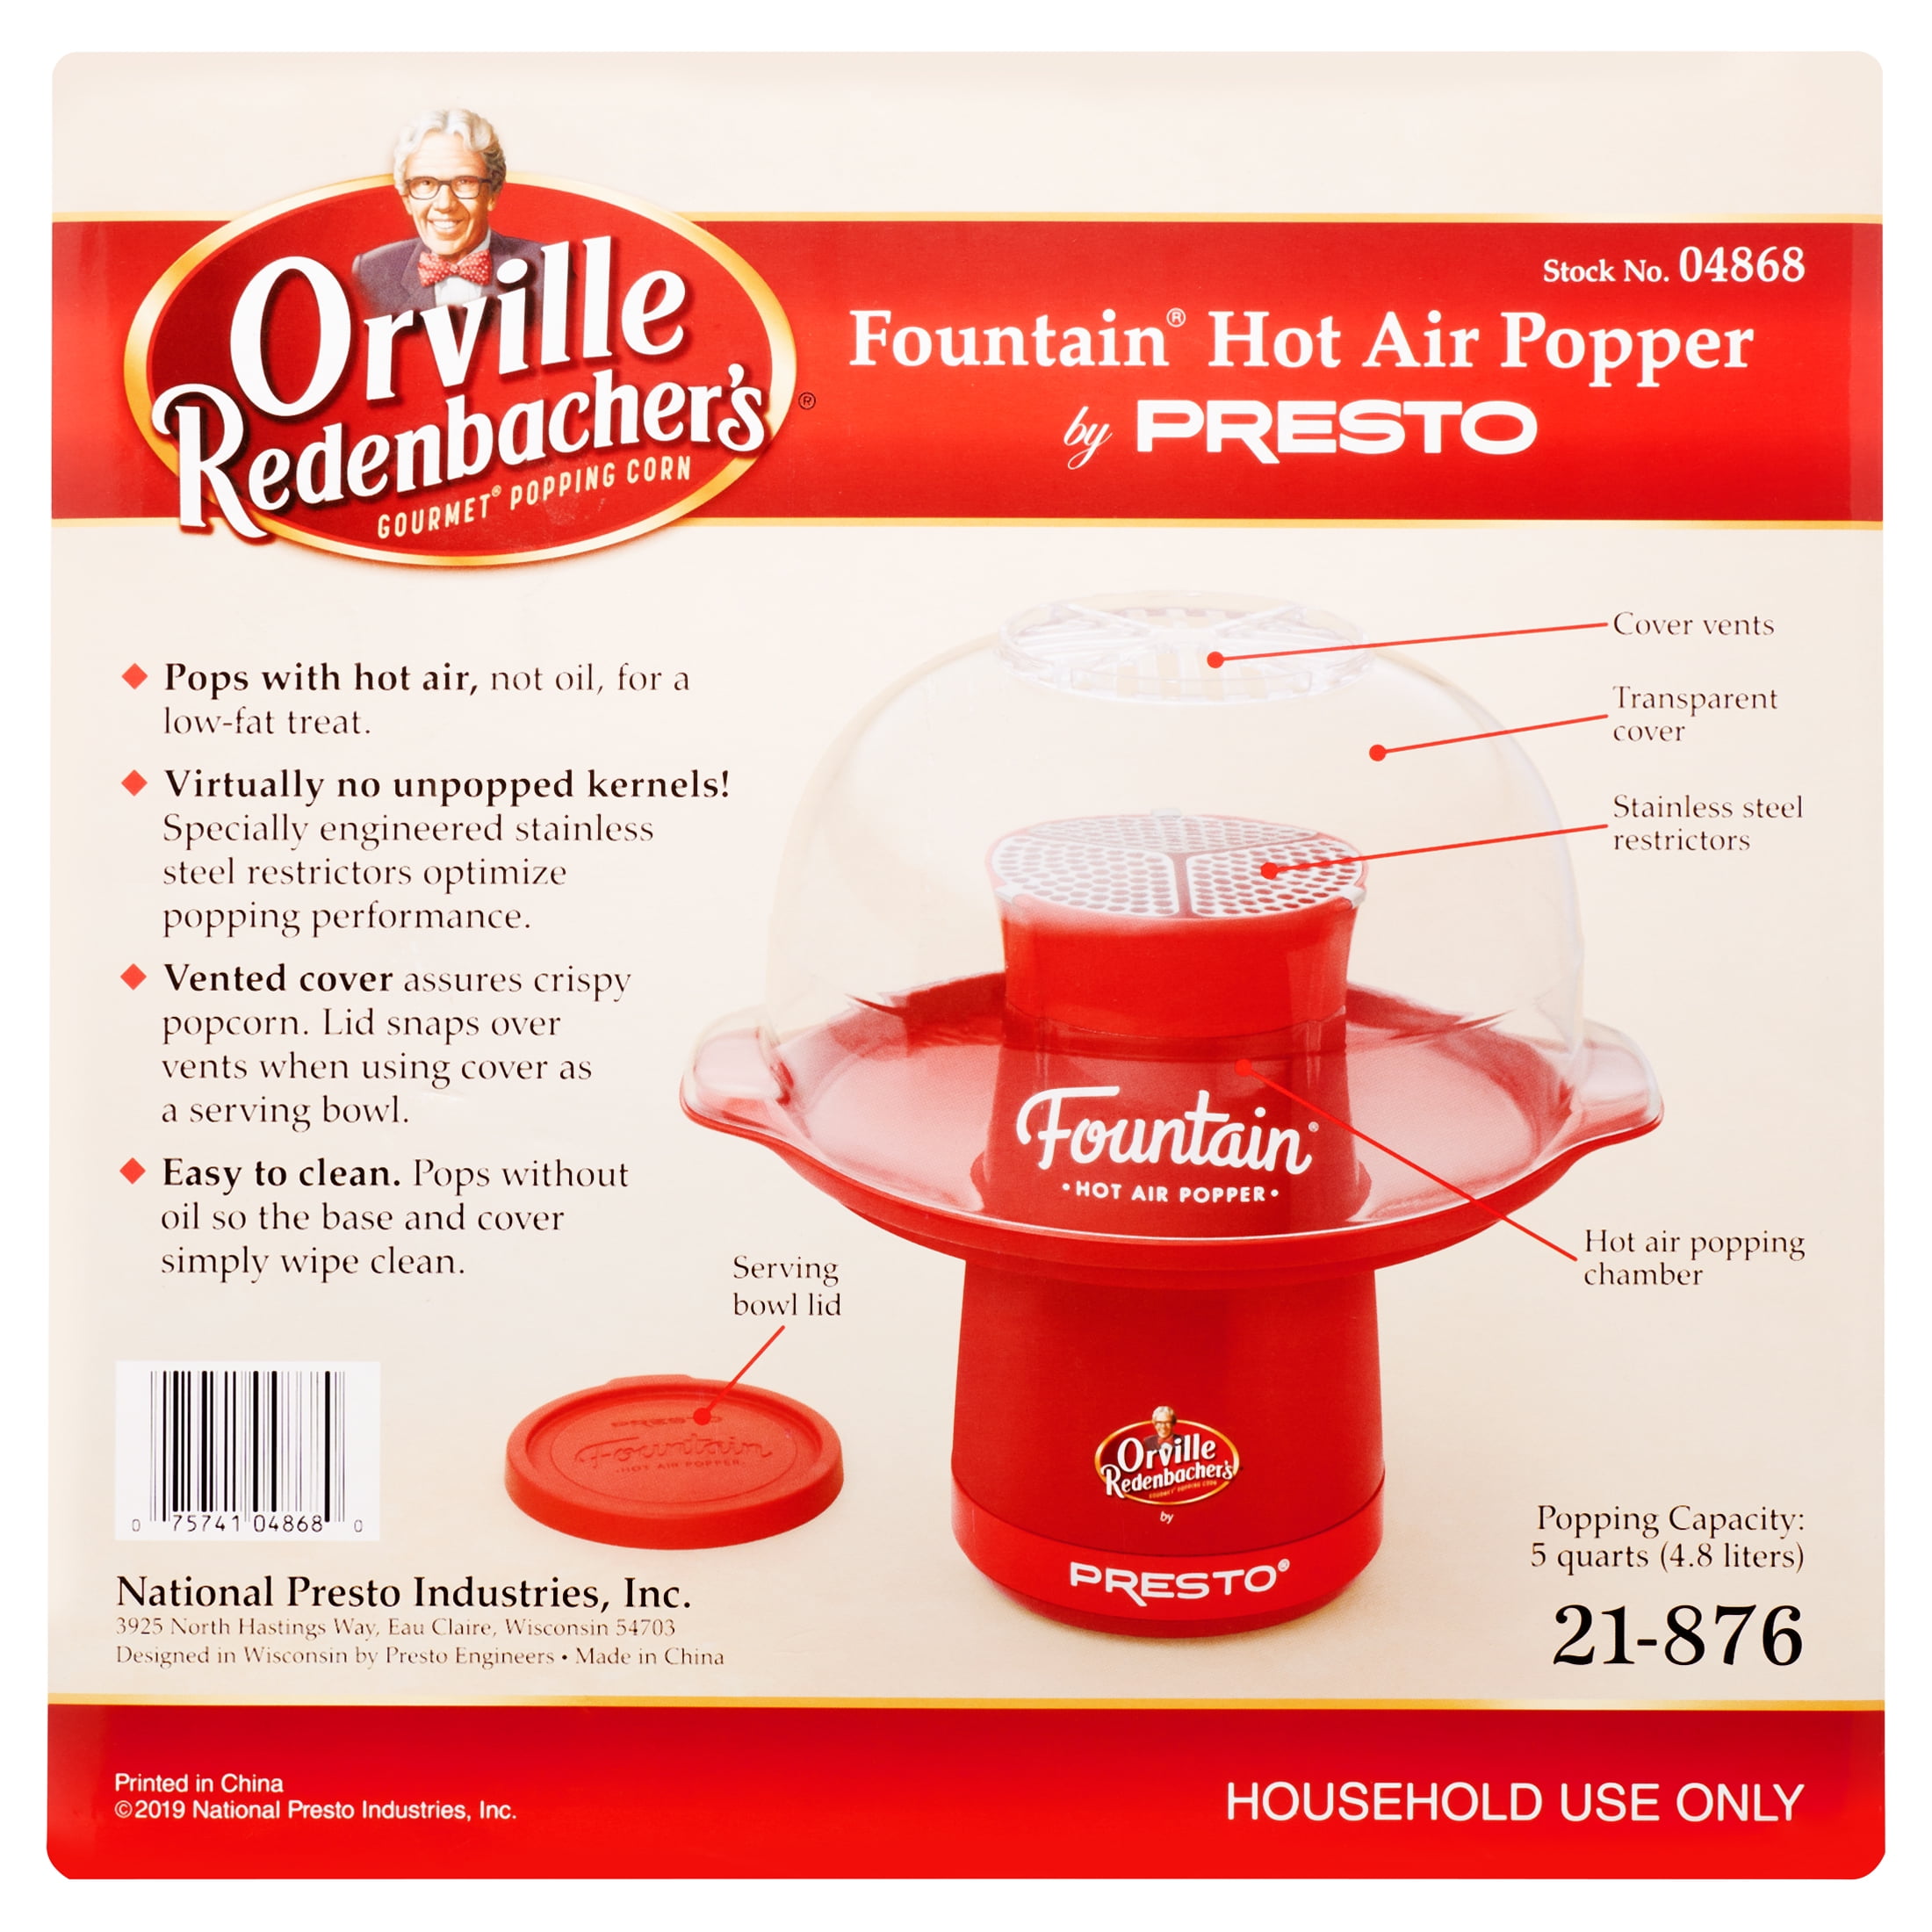 Orville Redenbacher's® Fountain® Hot Air Popper by Presto® 04868 